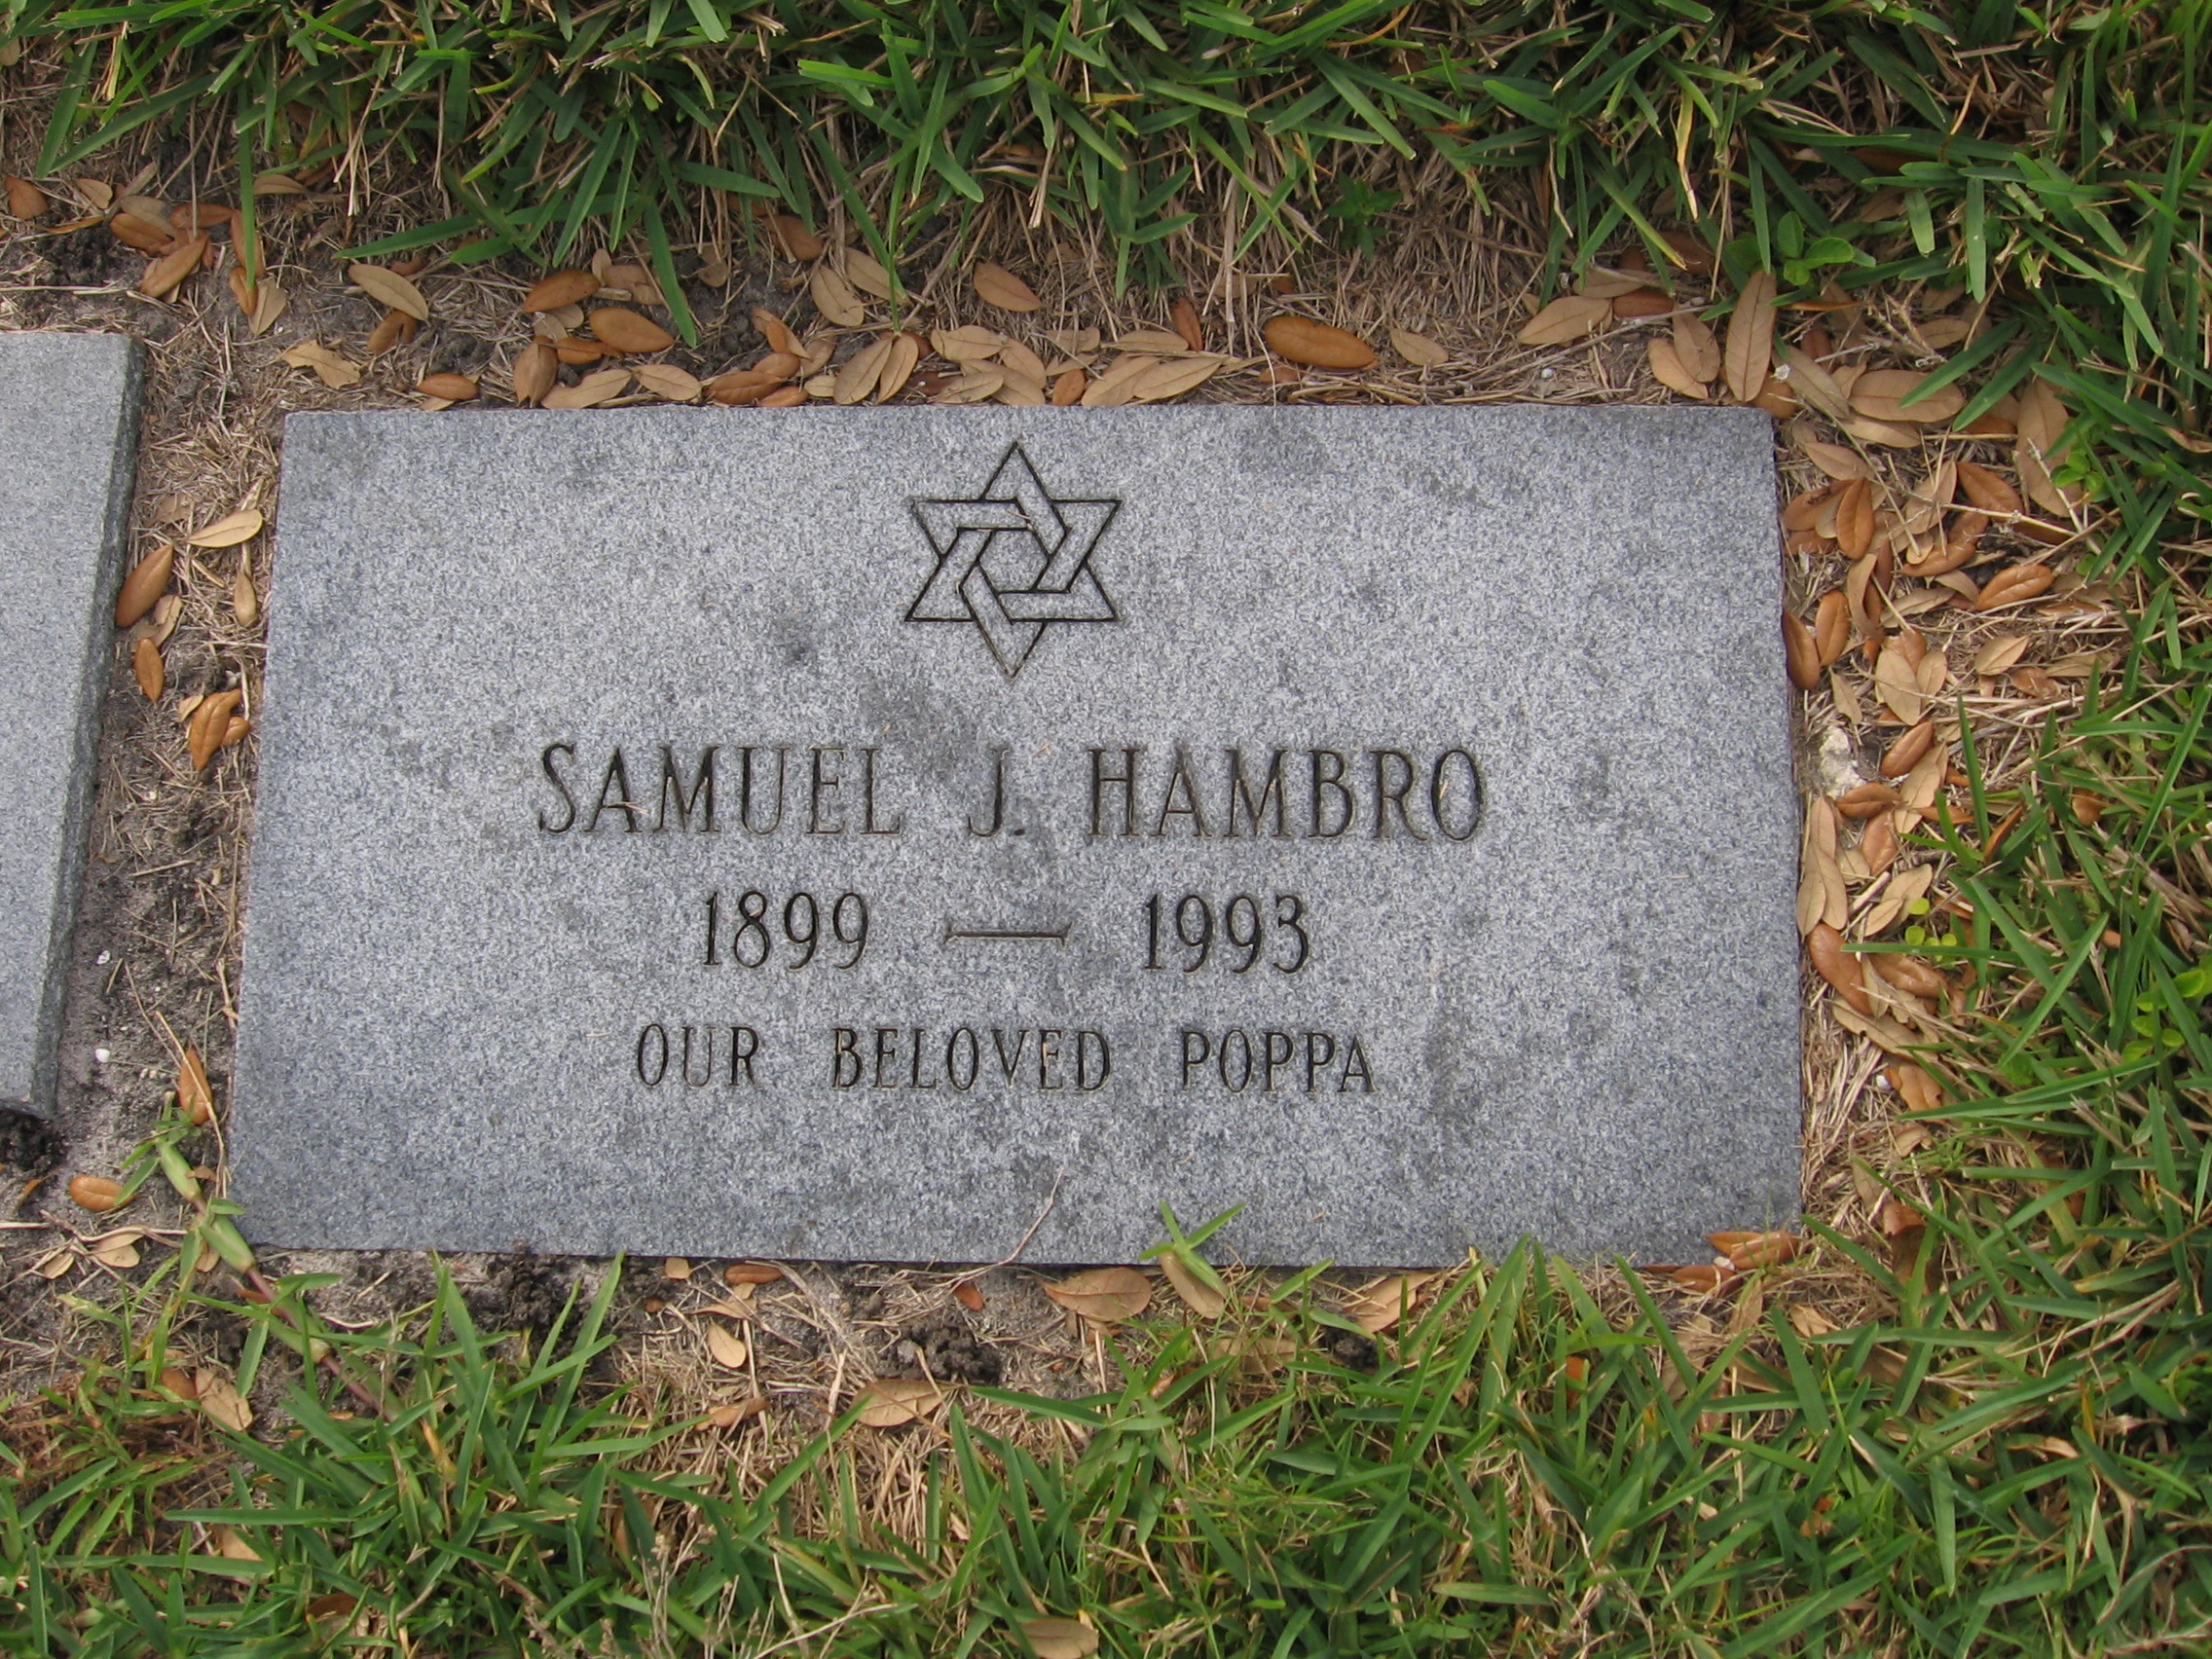 Samuel J Hambro